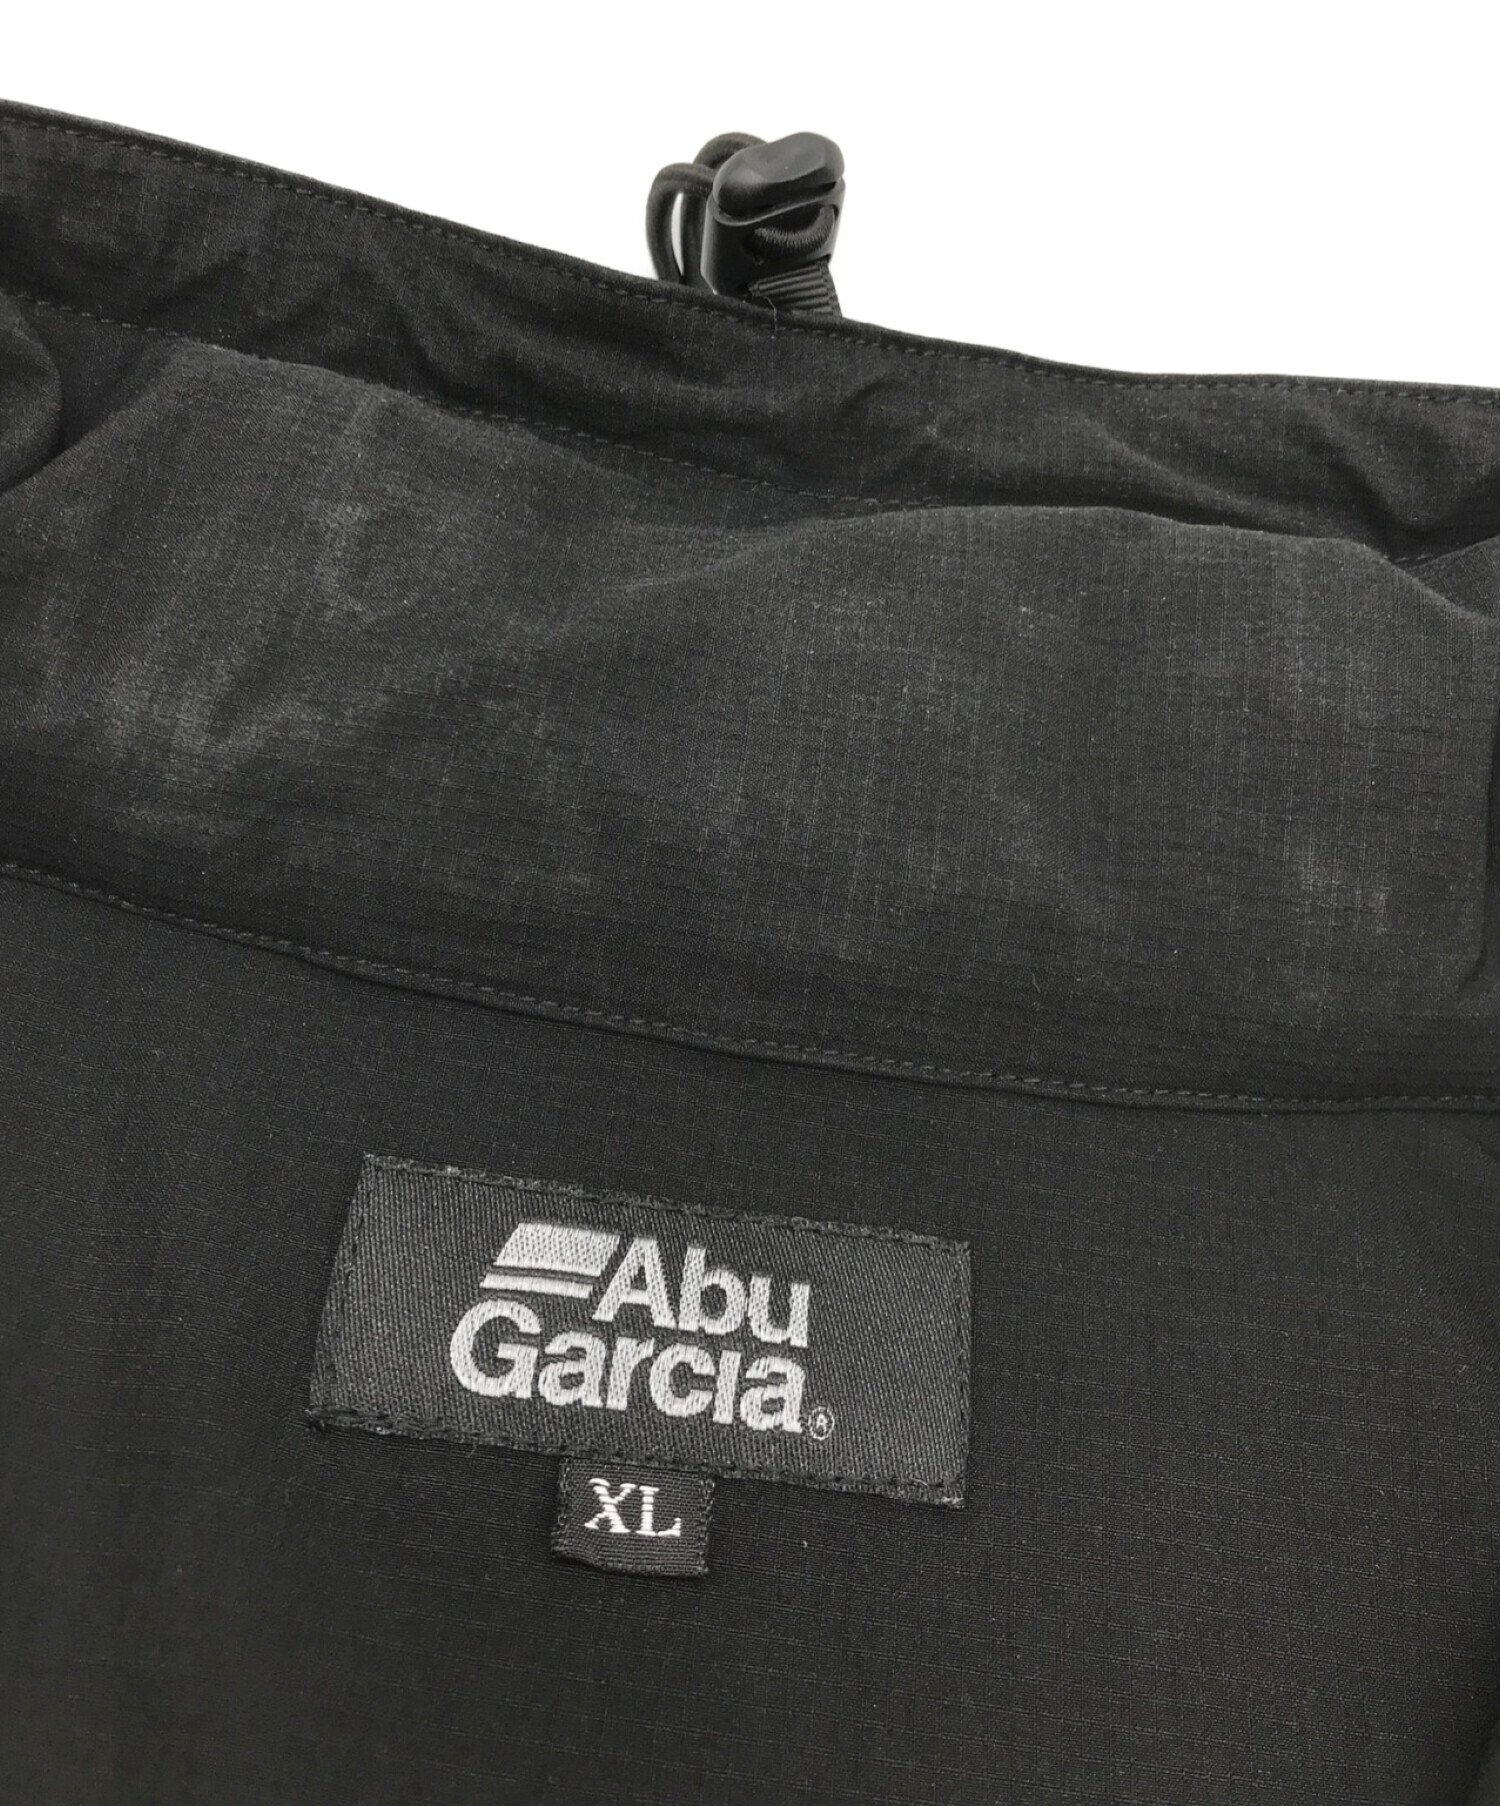 Abu Garcia (アブガルシア) ウォーターレジスタントアノラックフーディ ブラック サイズ:XL